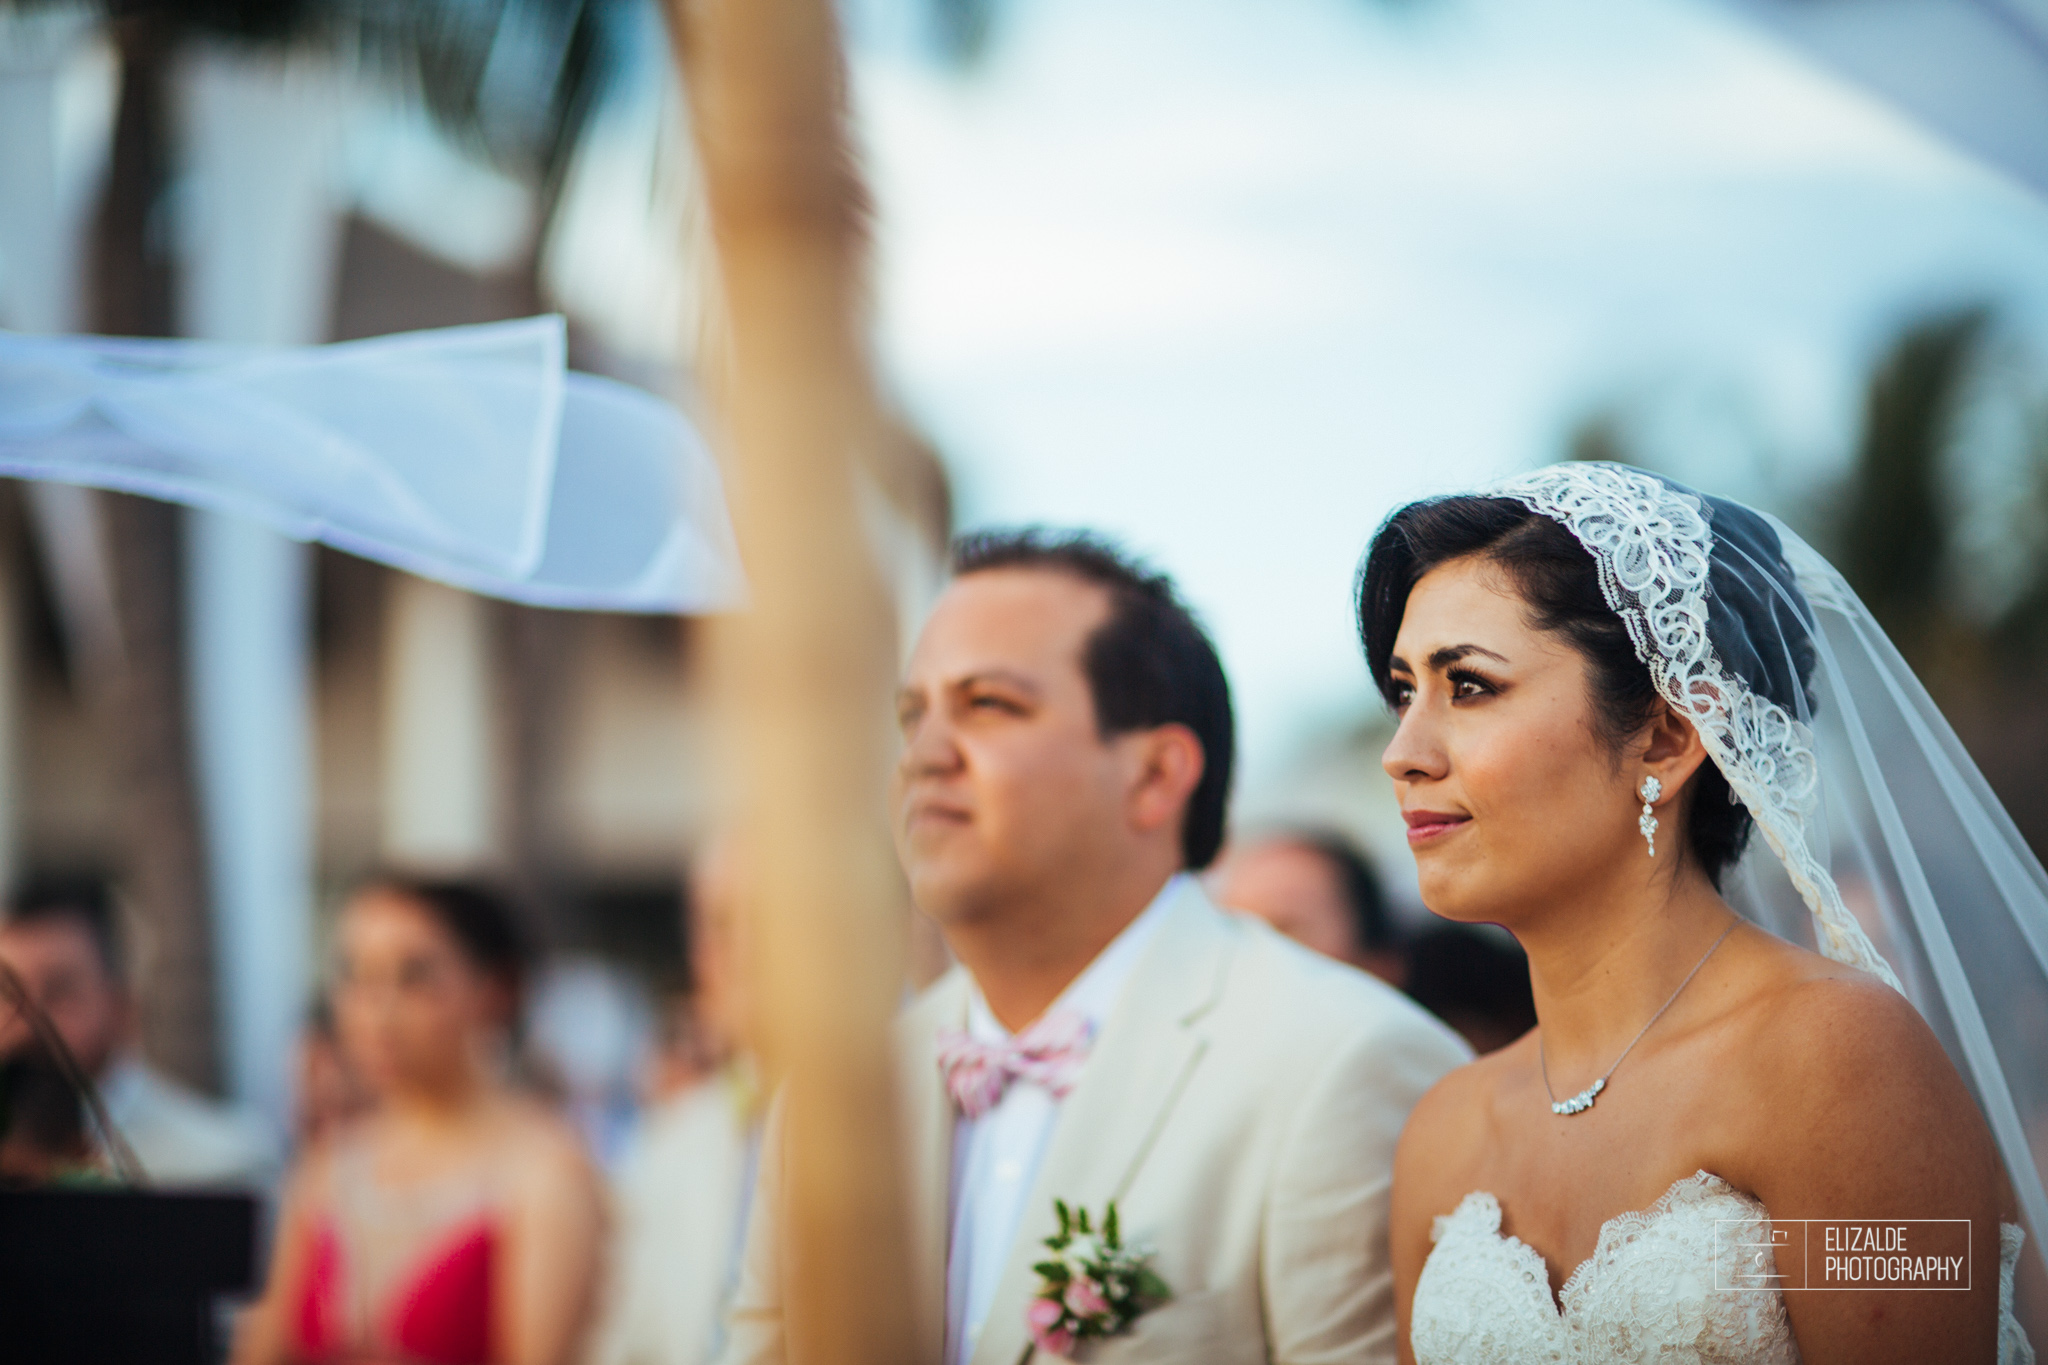 Pay and Ferran_Acapulco_Destination Wedding_Elizalde Photography-92.jpg